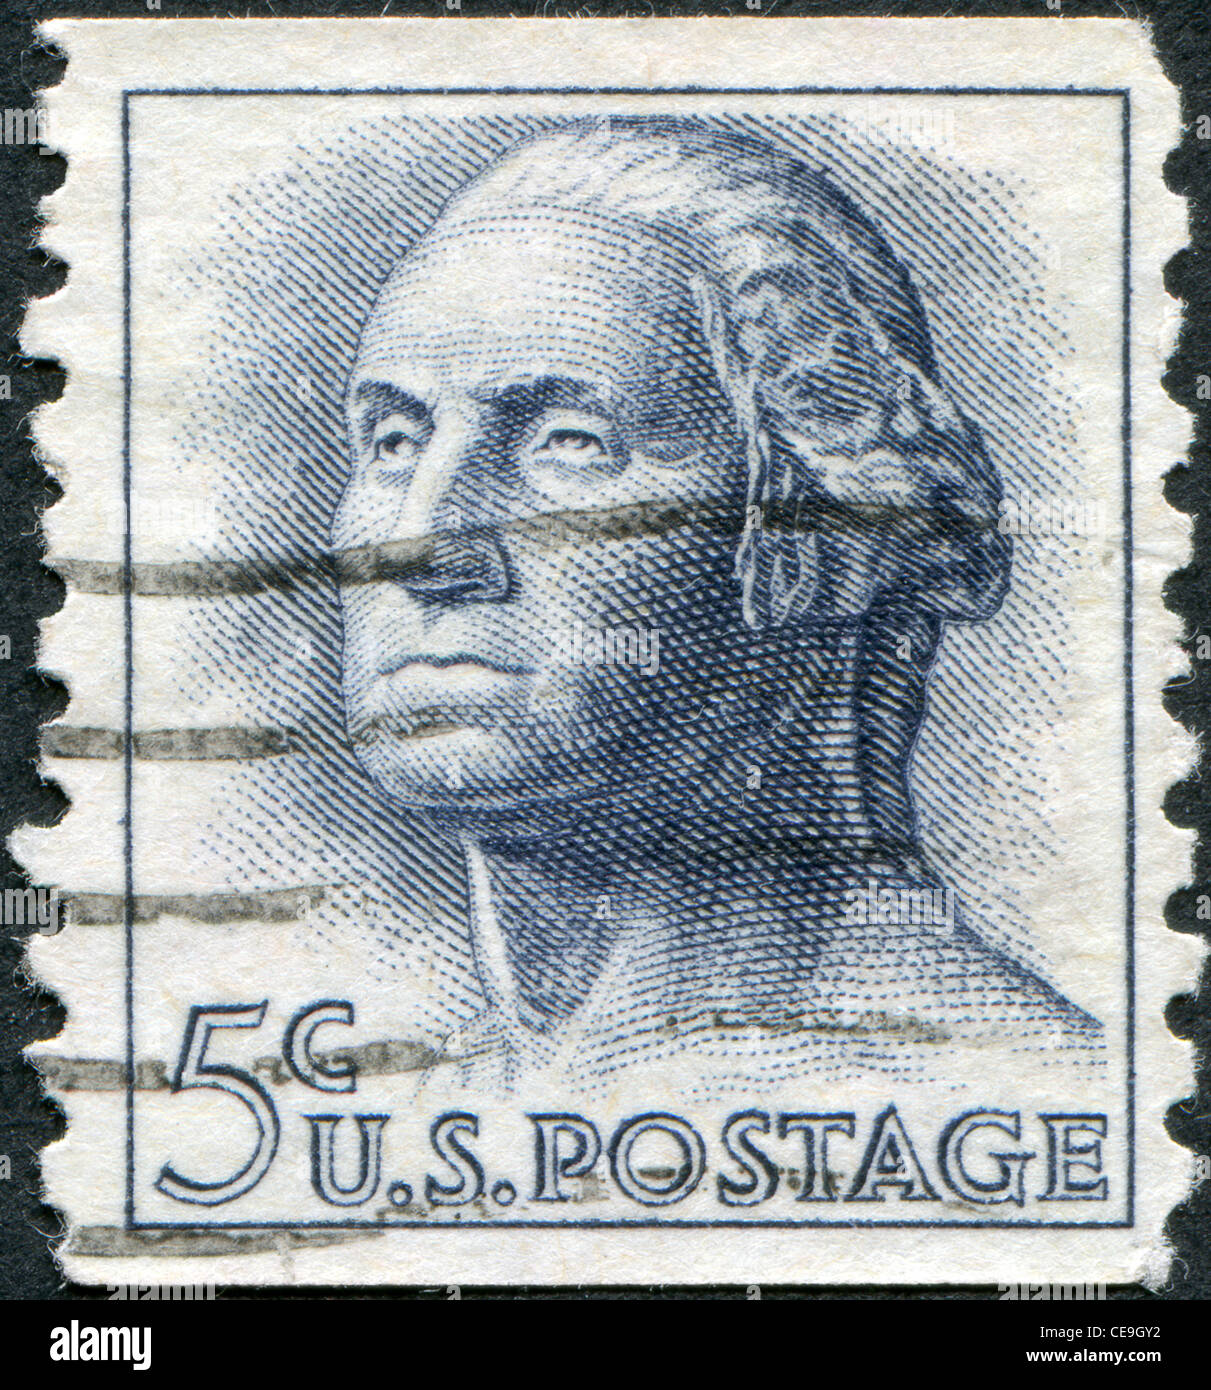 USA - CIRCA 1962: A stamp printed in the USA, shows the first U.S. president, George Washington, circa 1962 Stock Photo